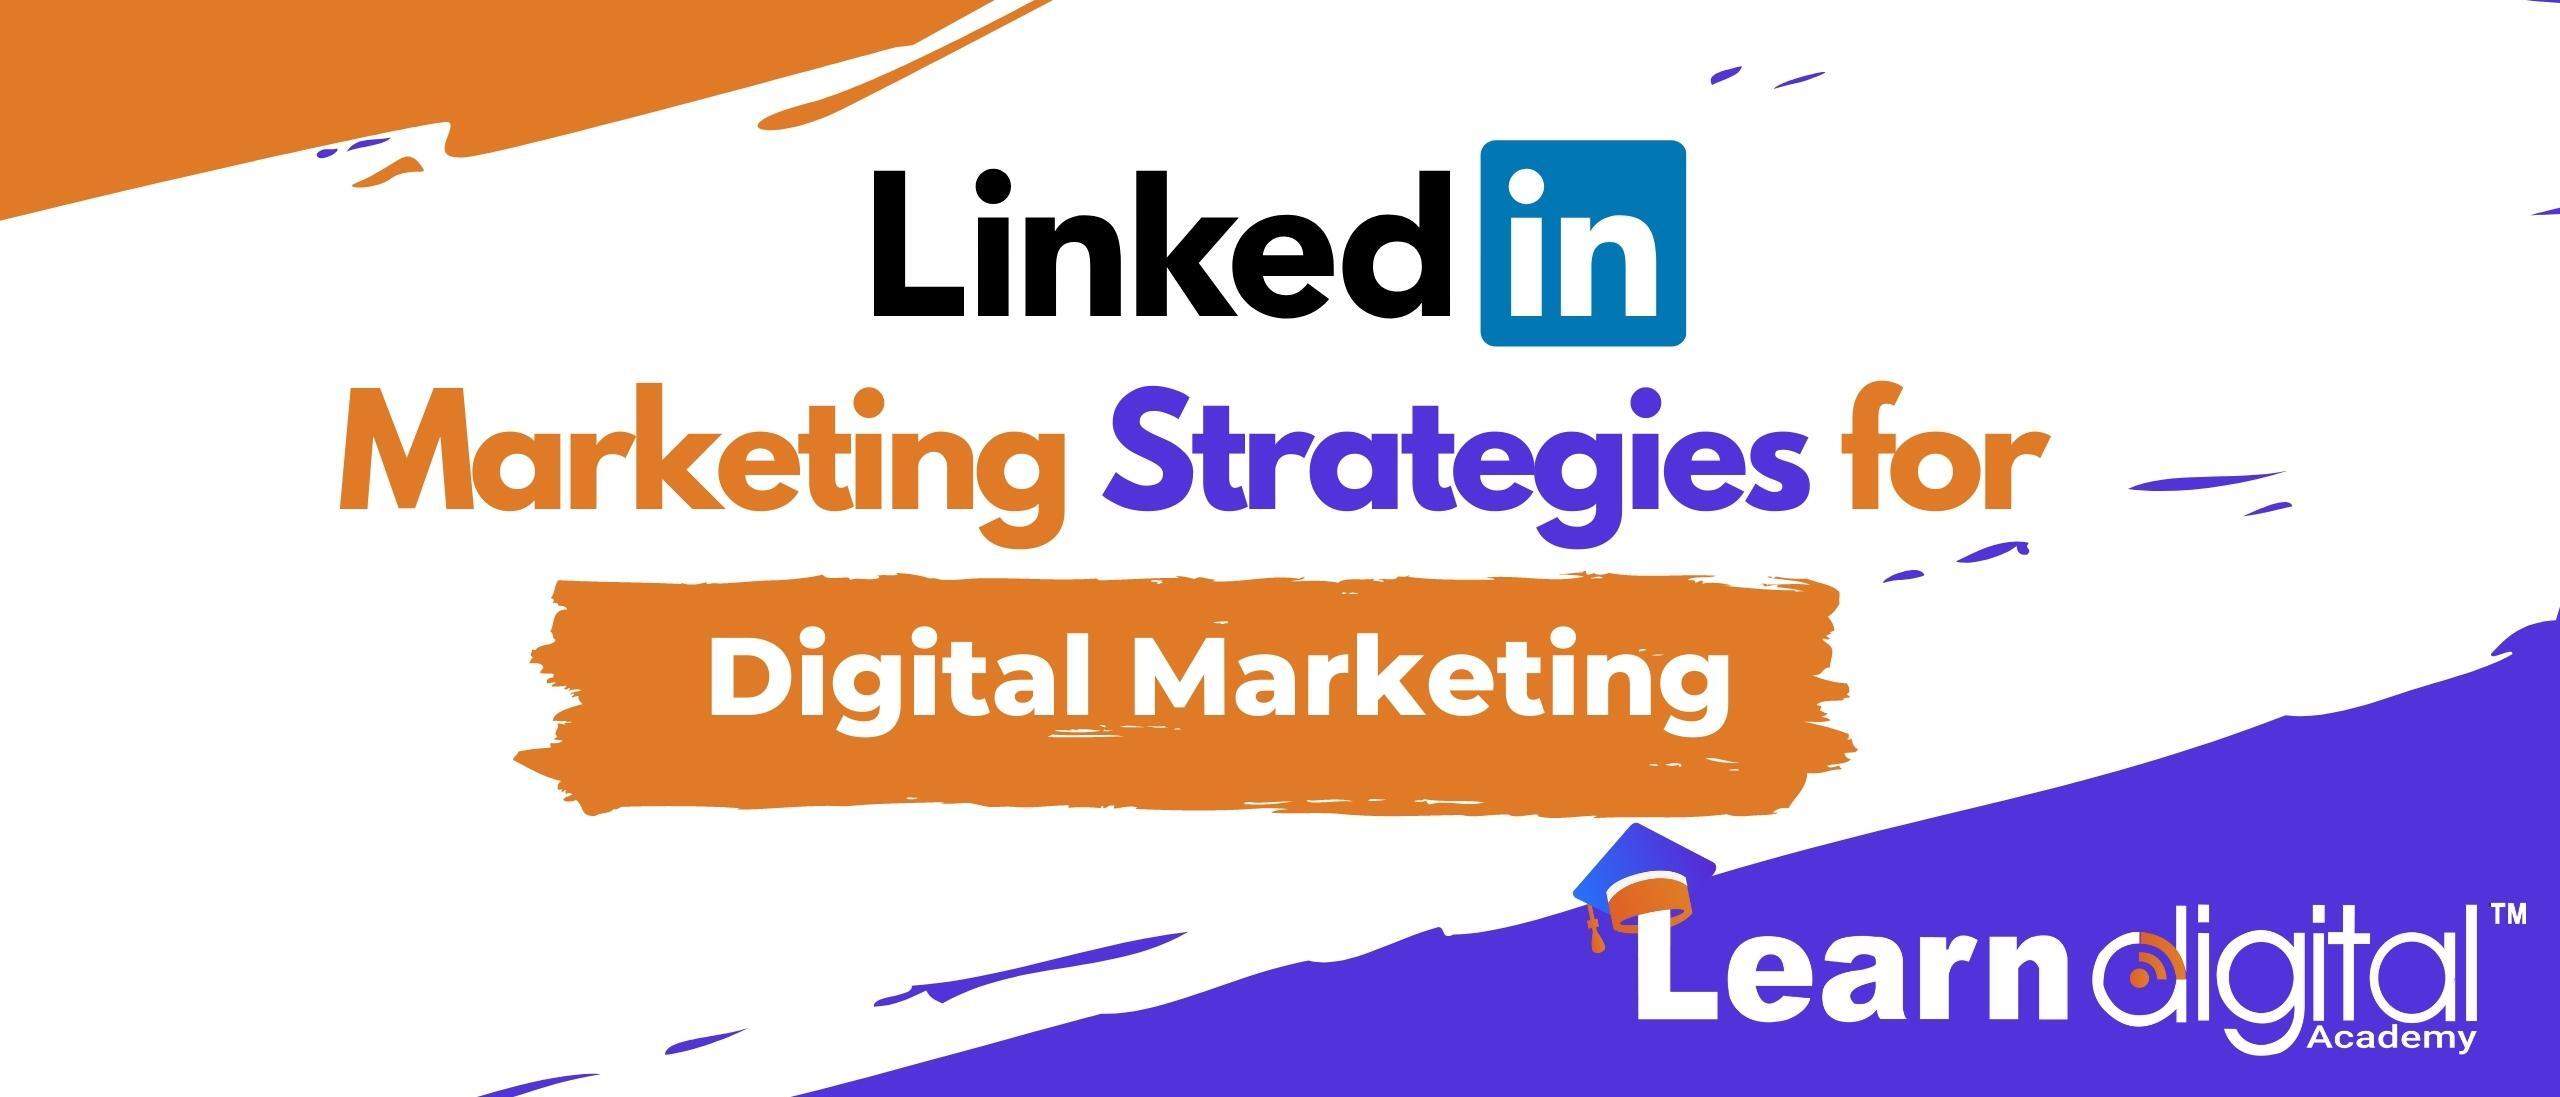 Linkedin-Marketing-Strategies-For-Digital-Marketing.jpg